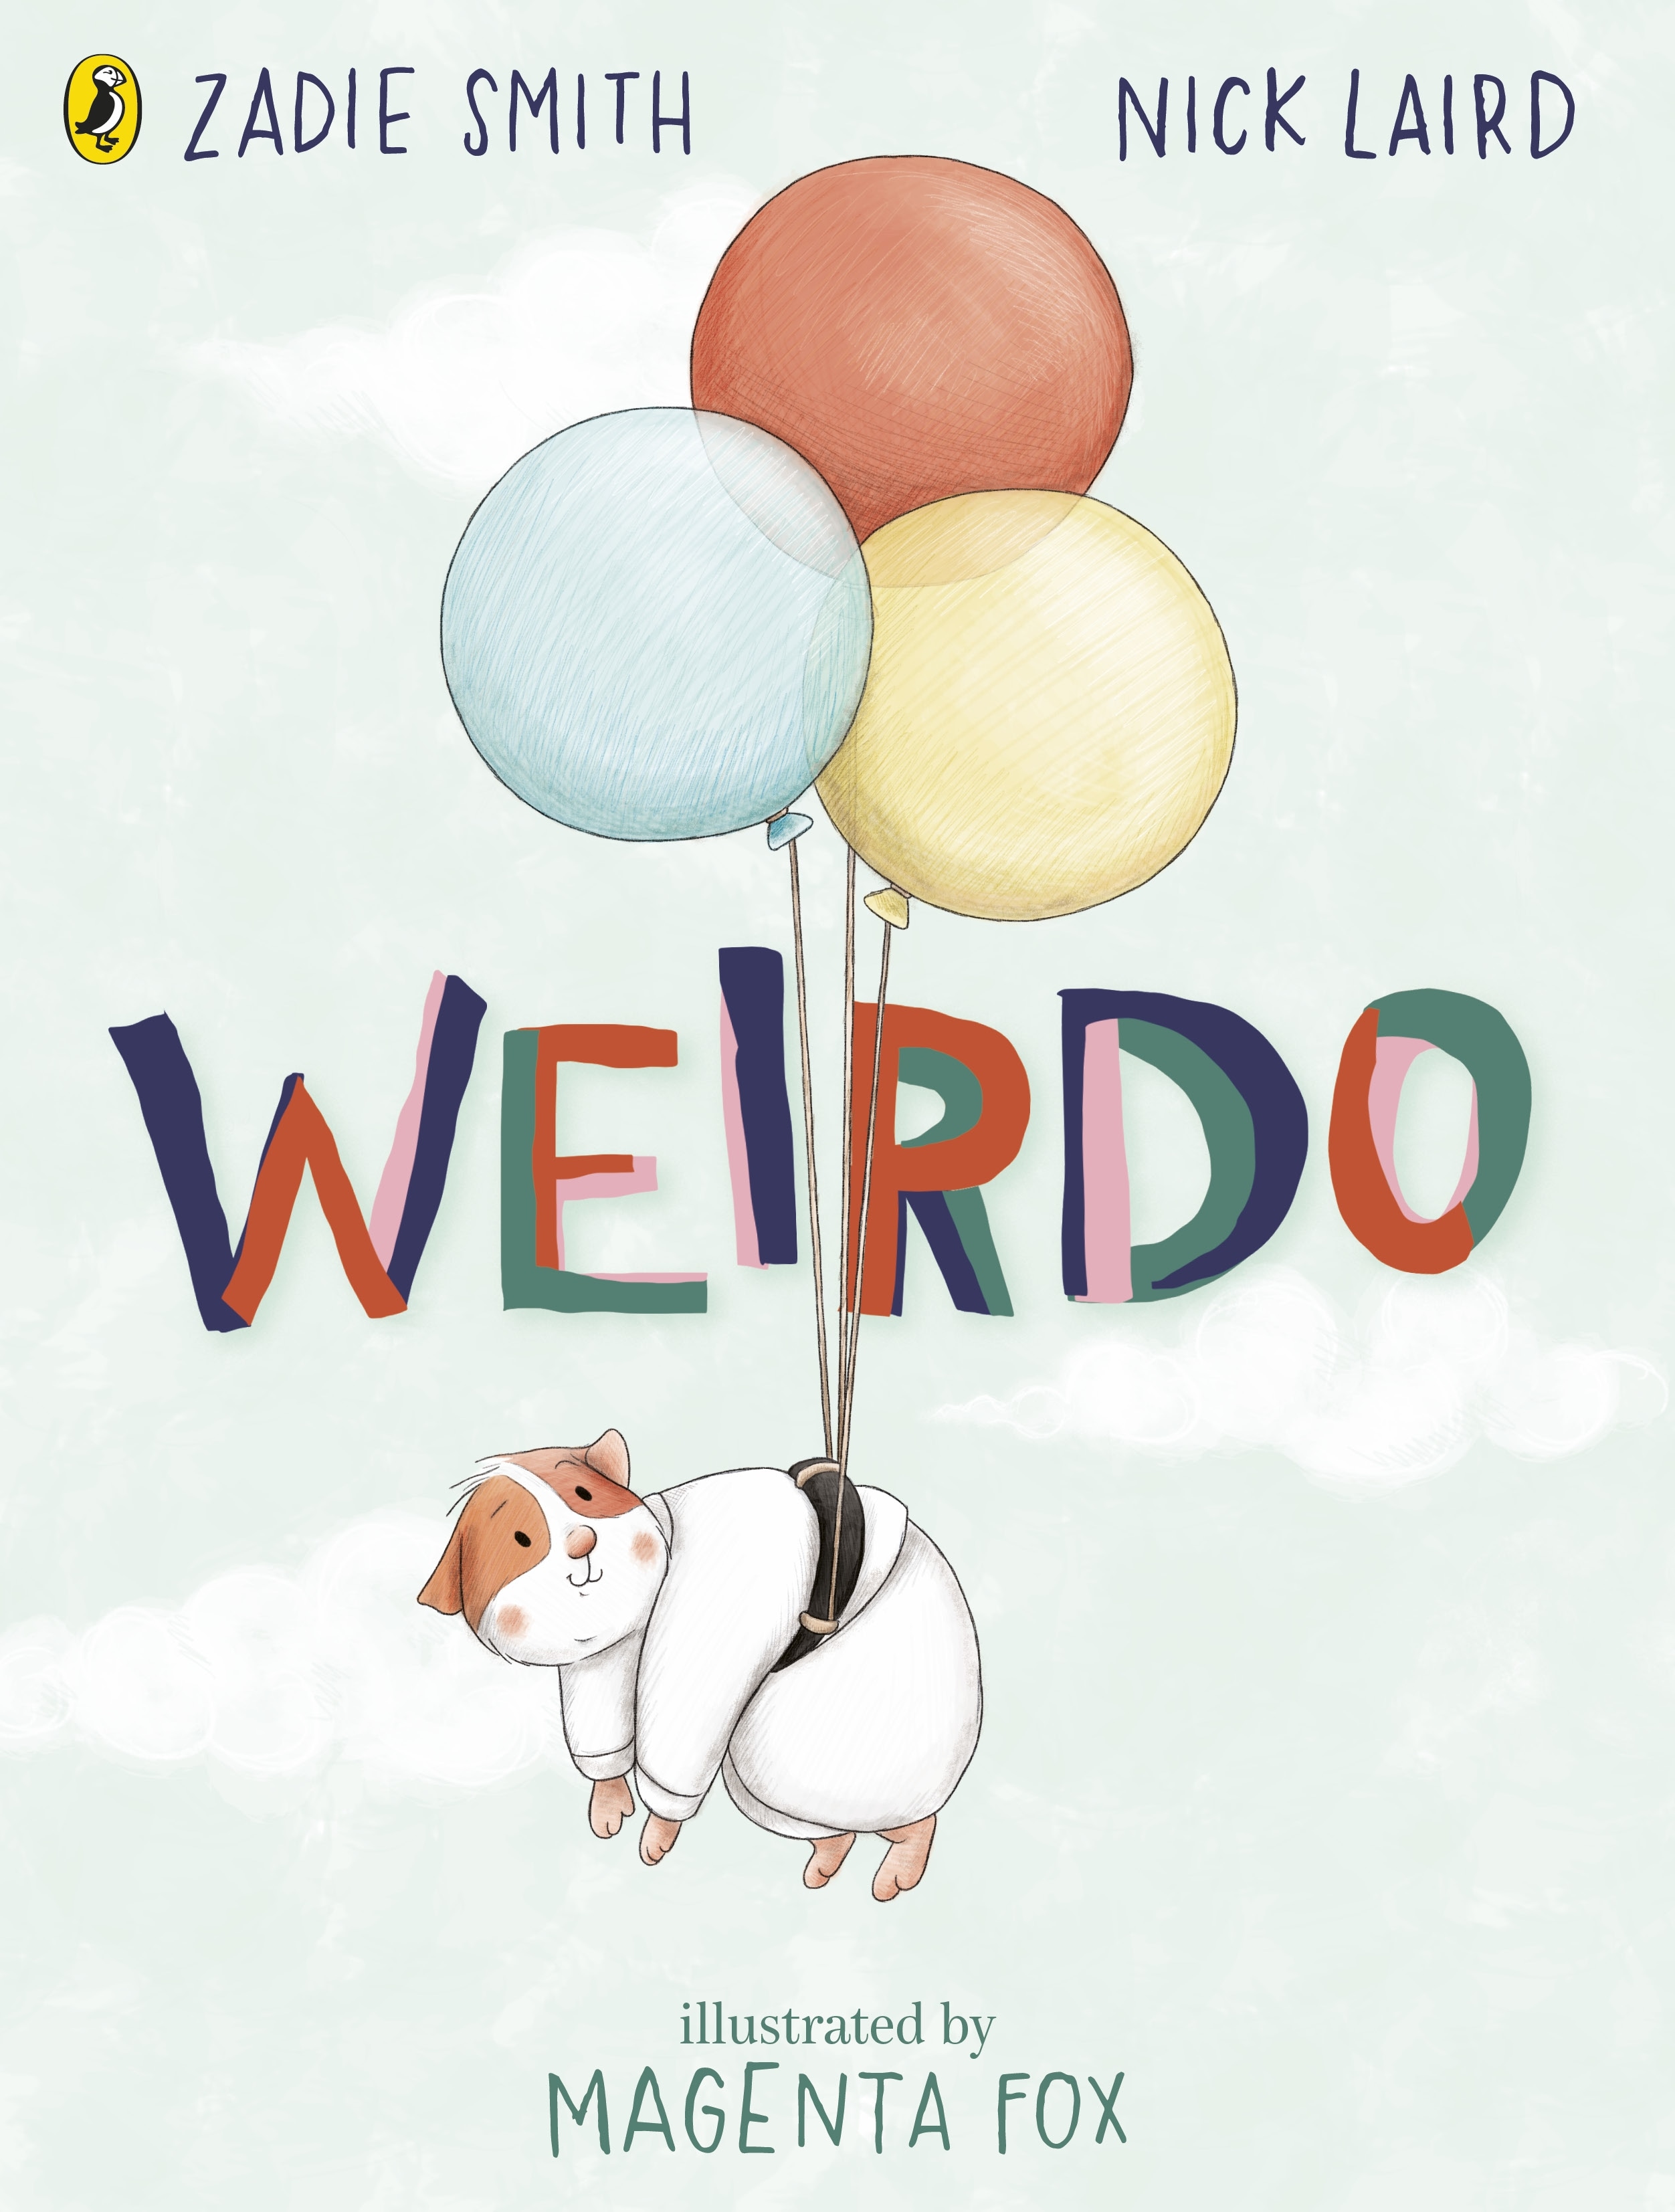 Book “Weirdo” by Zadie Smith, Nick Laird — June 16, 2022